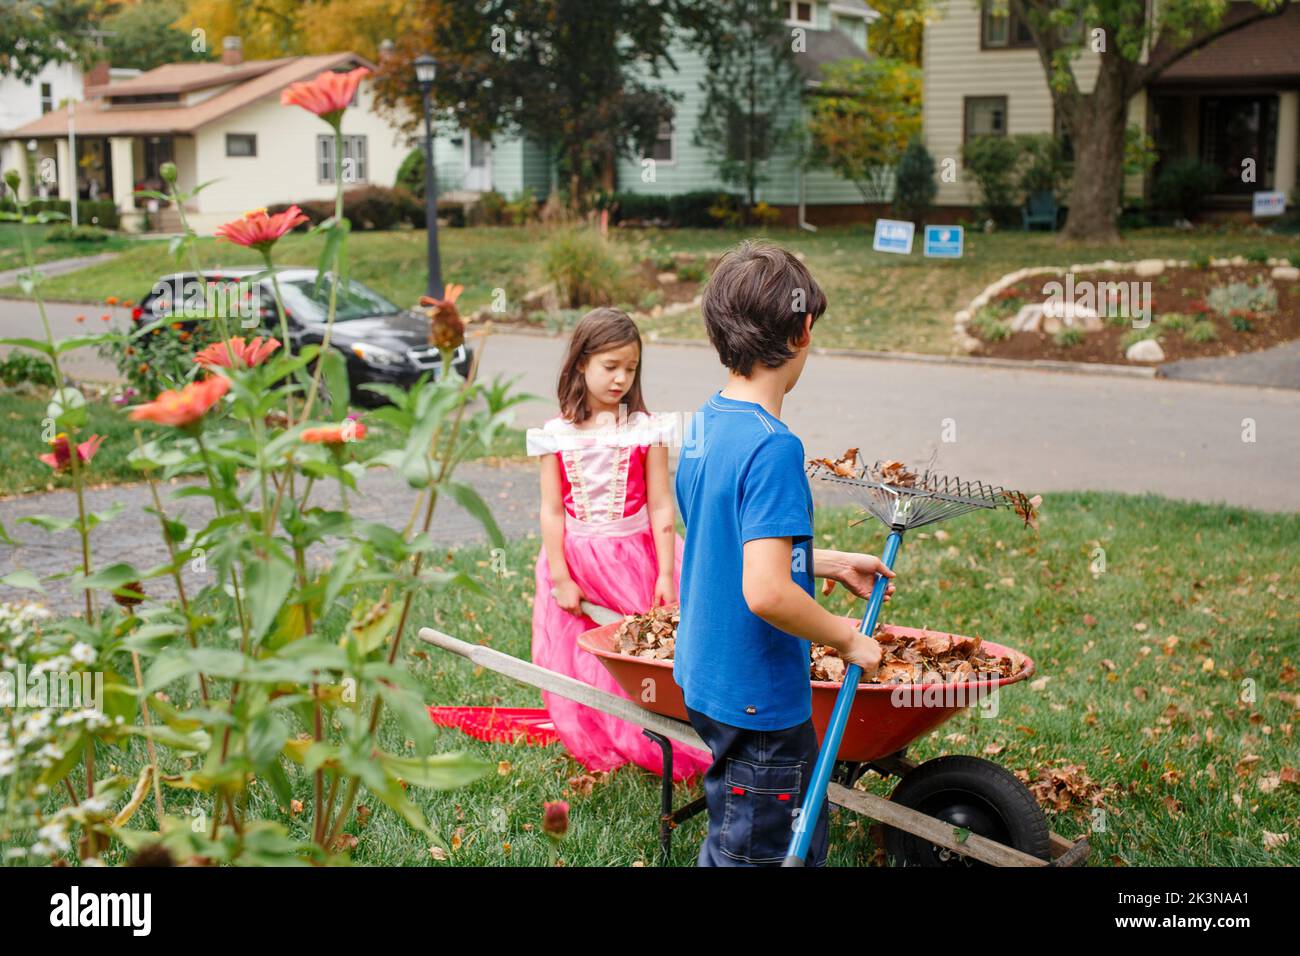 A girl in princess costume helps brother rake yard with wheelbarrow Stock Photo